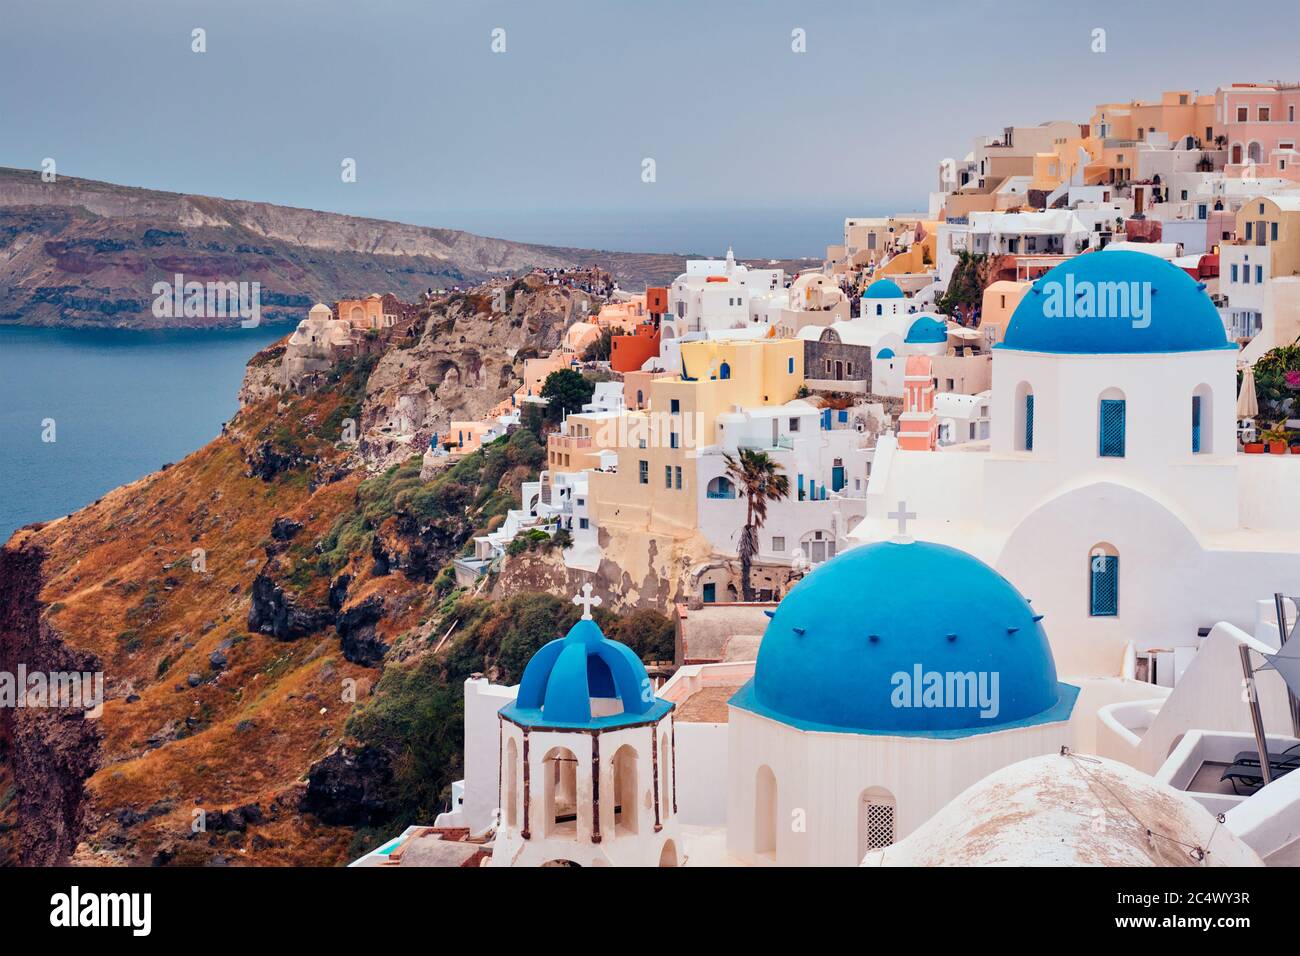 Famoso destino turístico griego Oia, Grecia Foto de stock